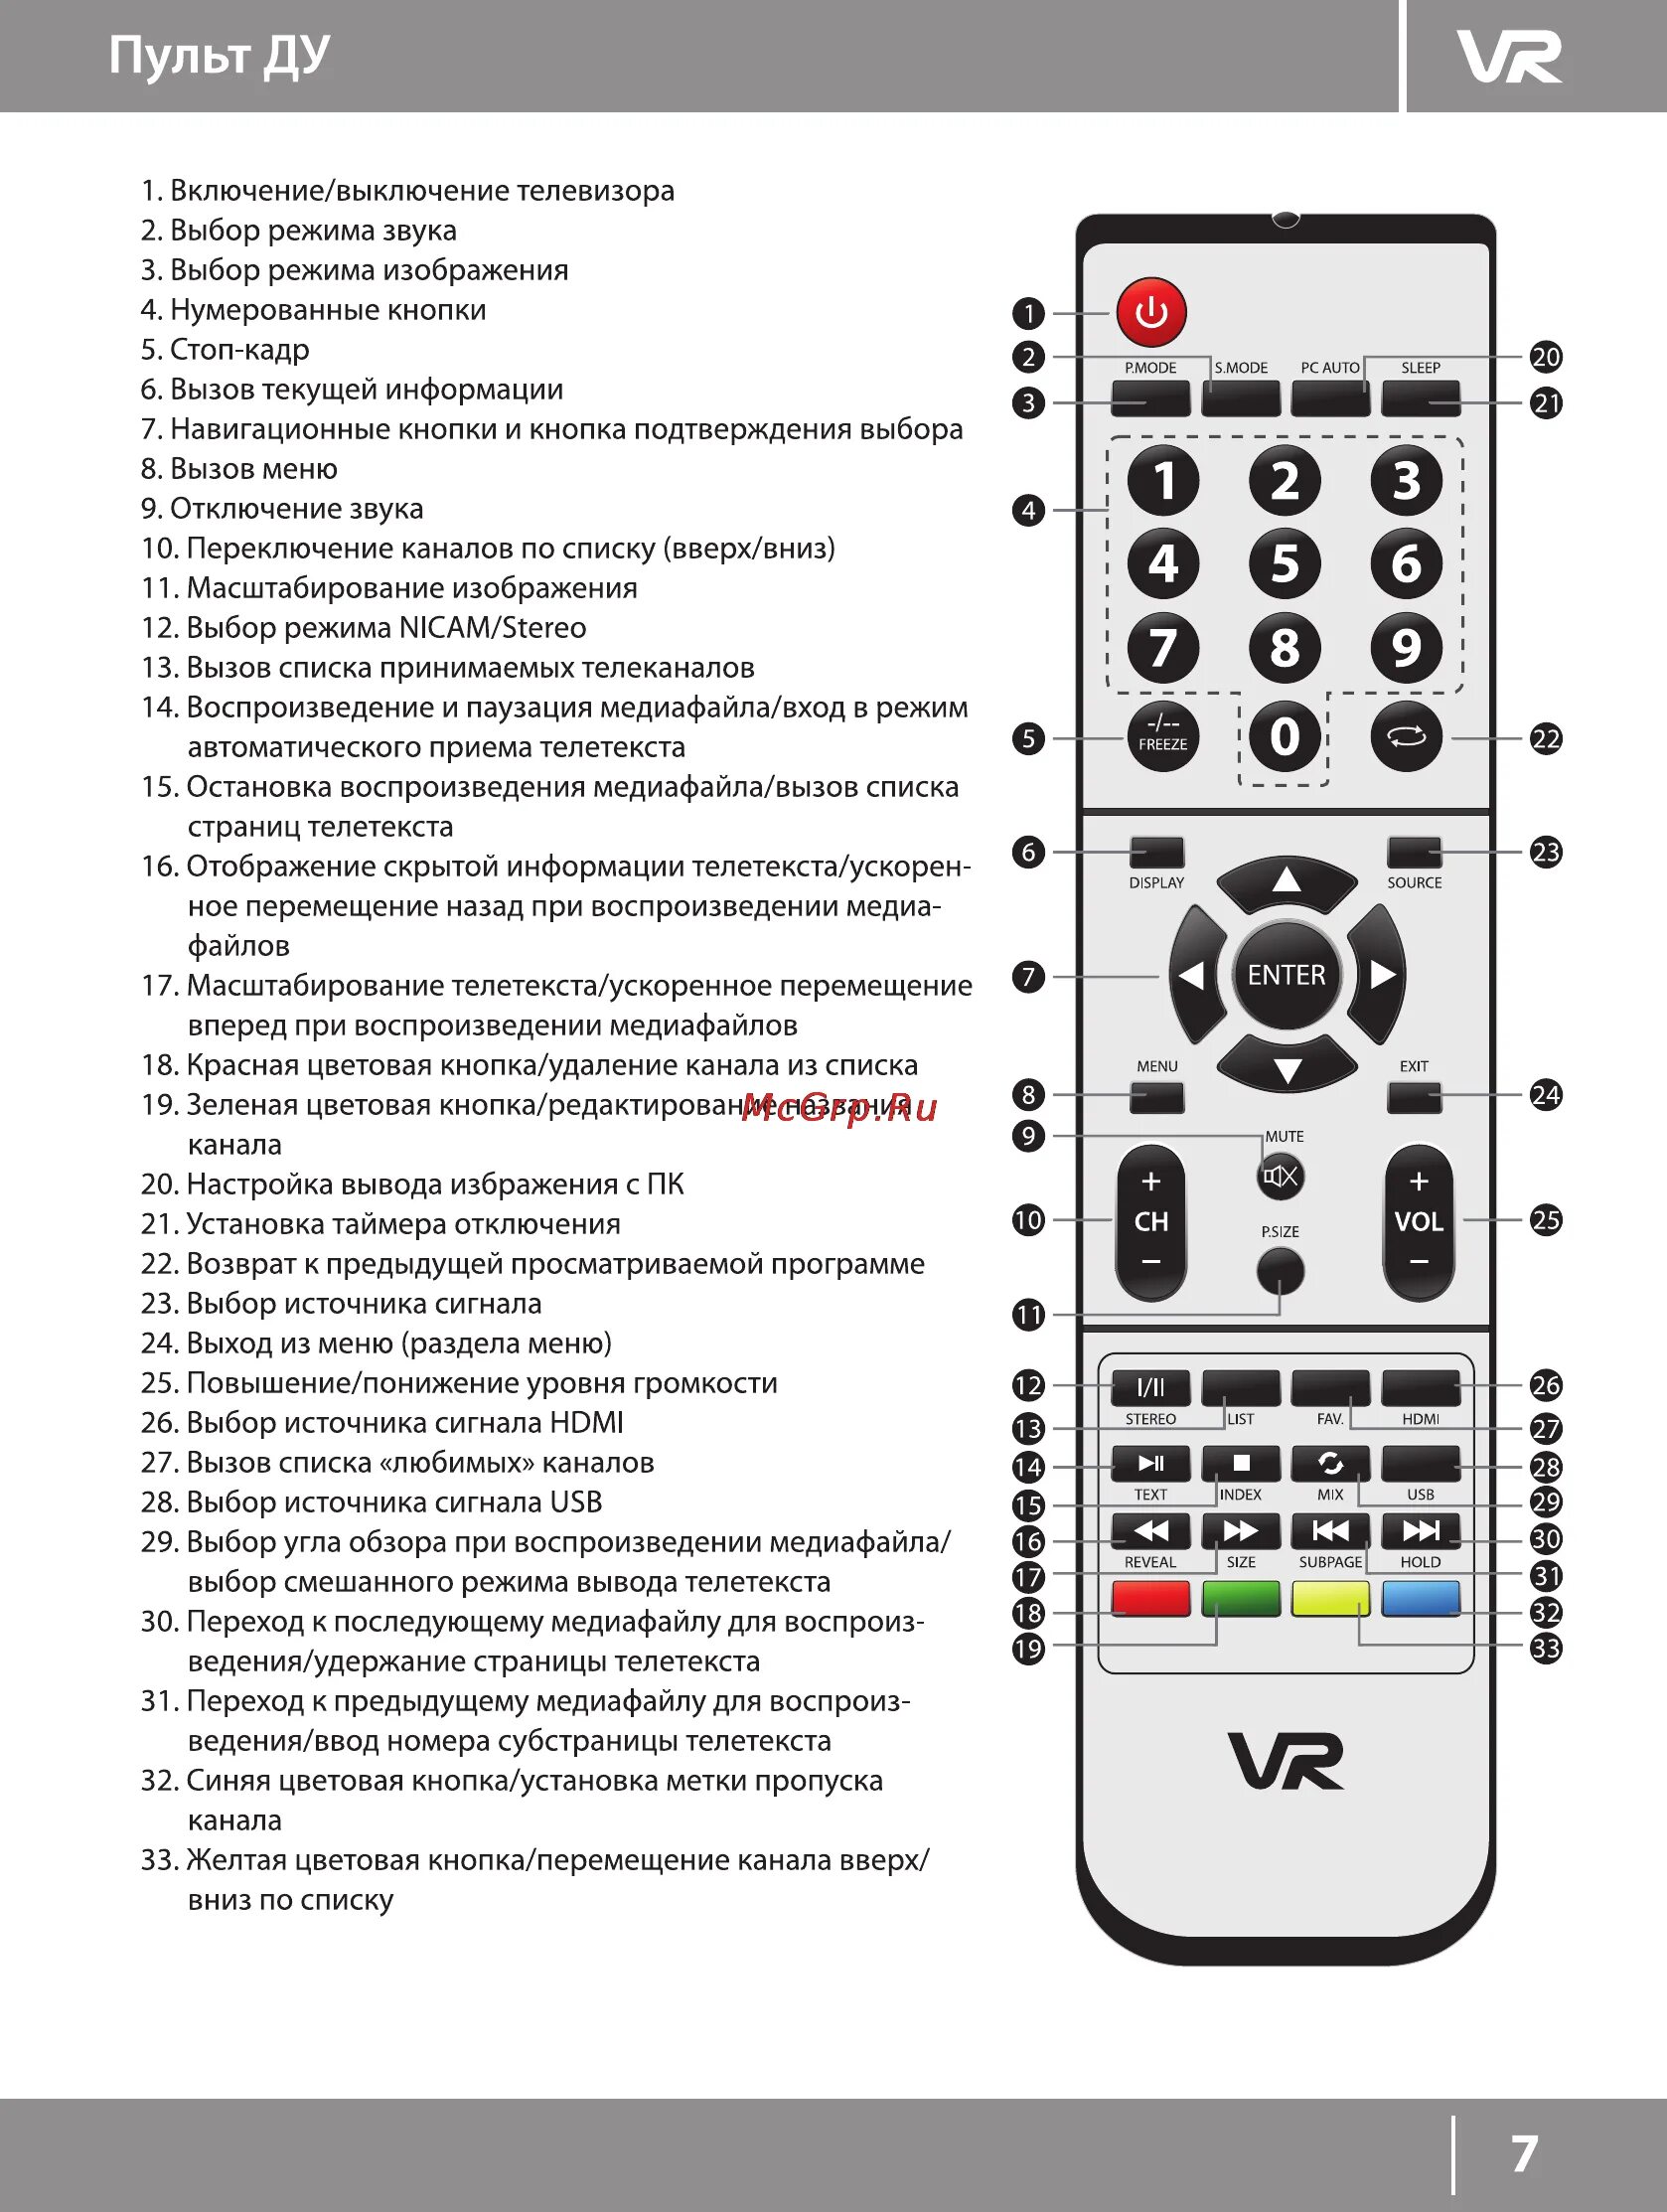 Отключить звук пульта. Телевизор VR lt-26l04v 26". Пульт Ду для TV Supra/VR lt-15n08v. VR very reliable пульт. Кнопки на пульте телевизора Горизонт обозначения.